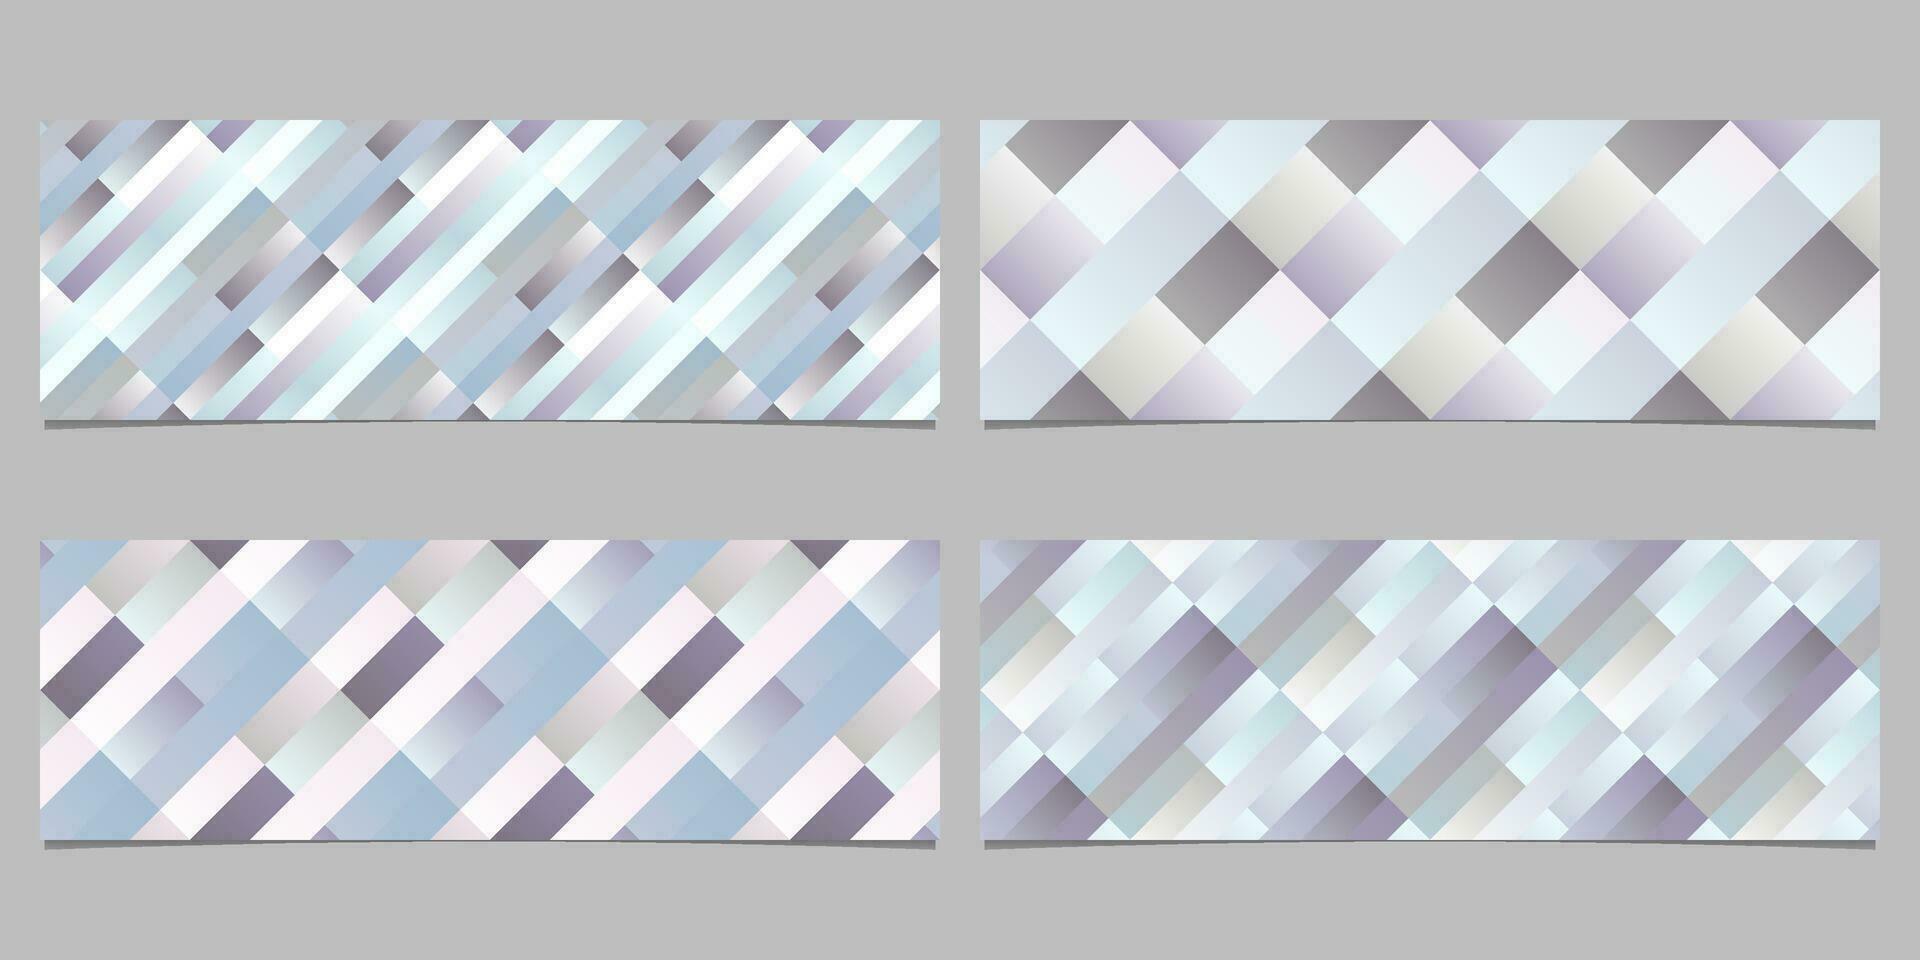 meetkundig helling streep patroon banier achtergrond reeks - abstract vector illustraties van diagonaal strepen